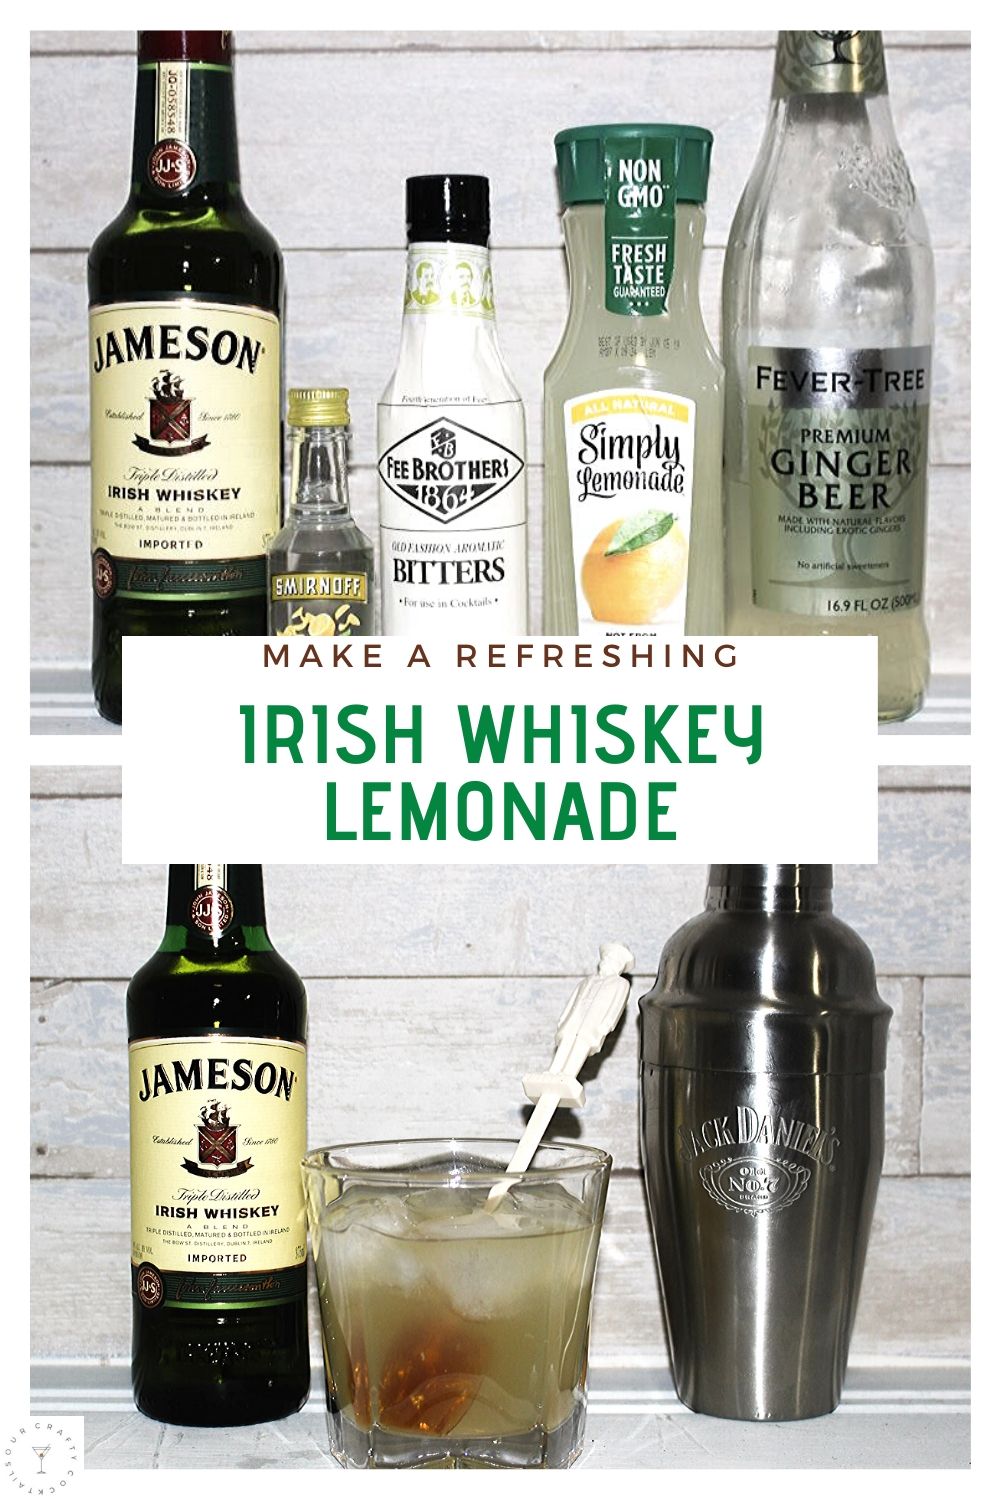 jameson irish whiskey lemonade supplies collage of two